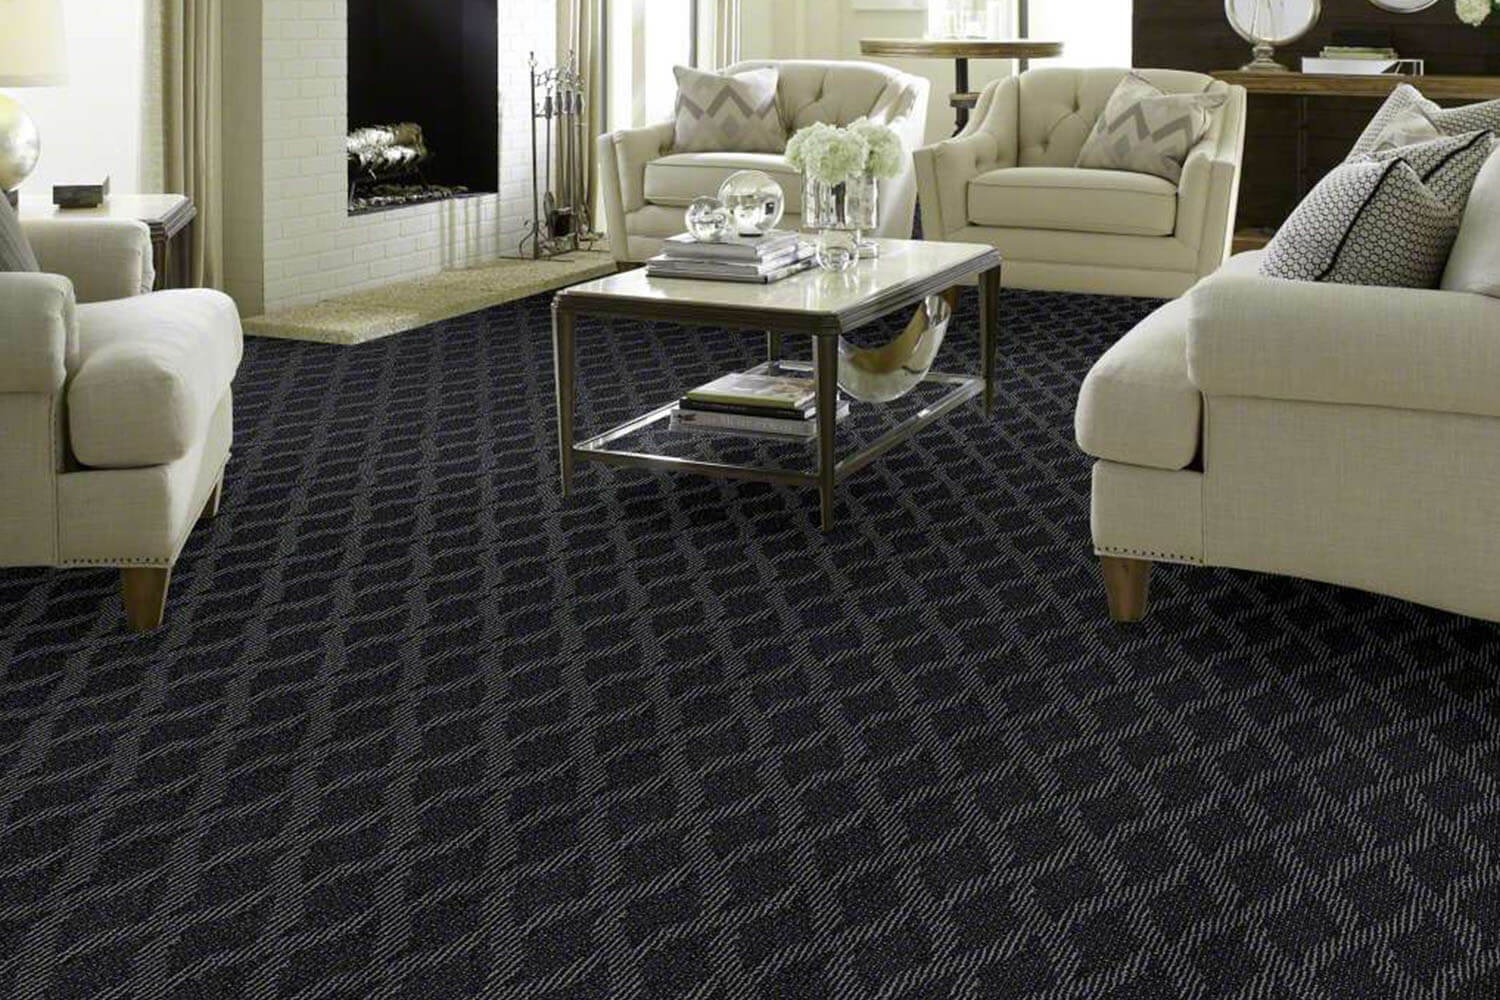 Shaw Floors Carpet Sale 2018 D S Flooring